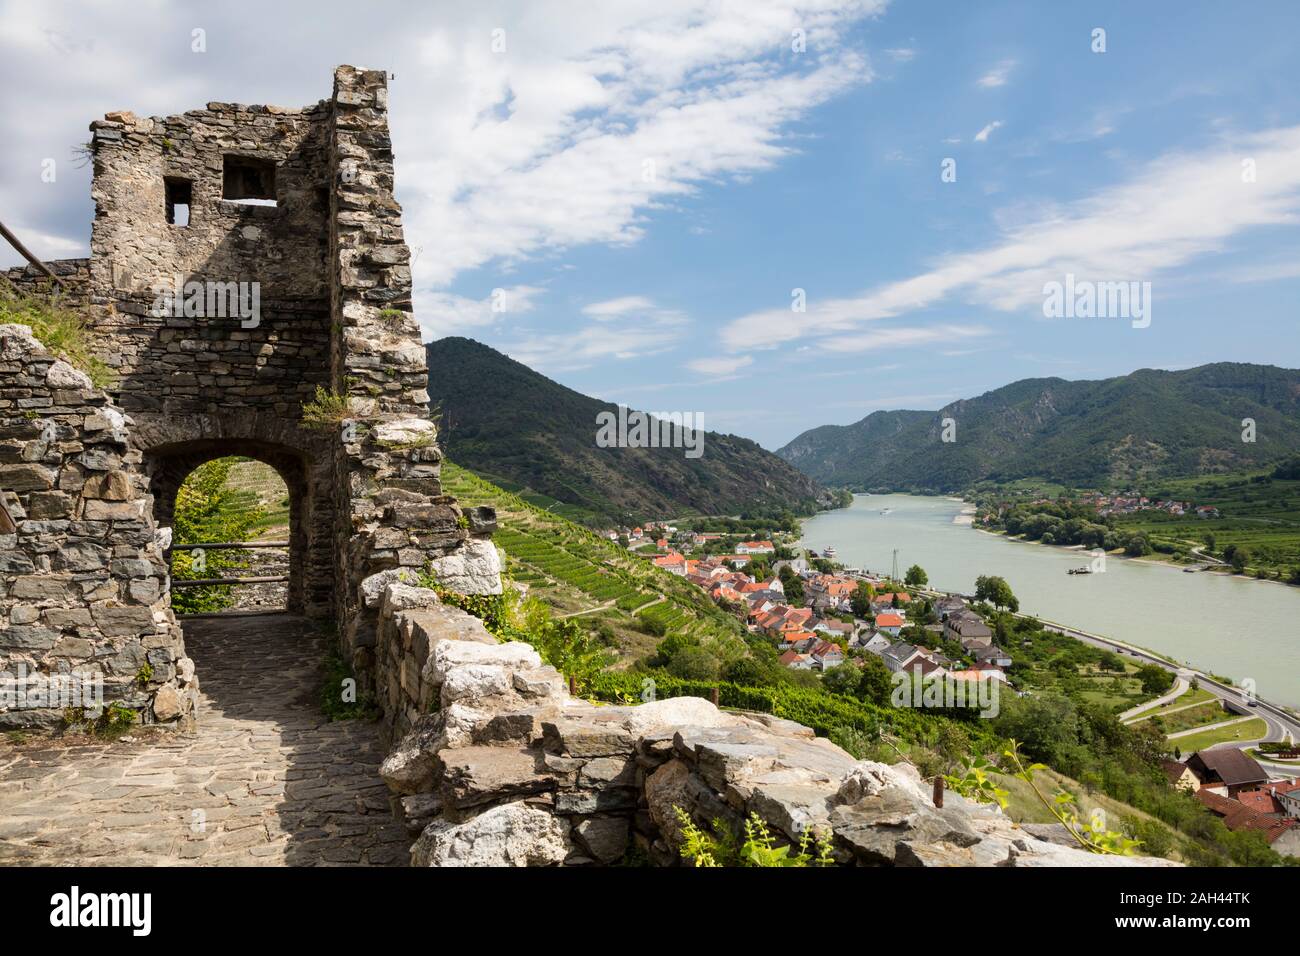 Austria, Lower Austria, Wachau, Spitz an der Donau, View of ruins of castle and Danube river Stock Photo